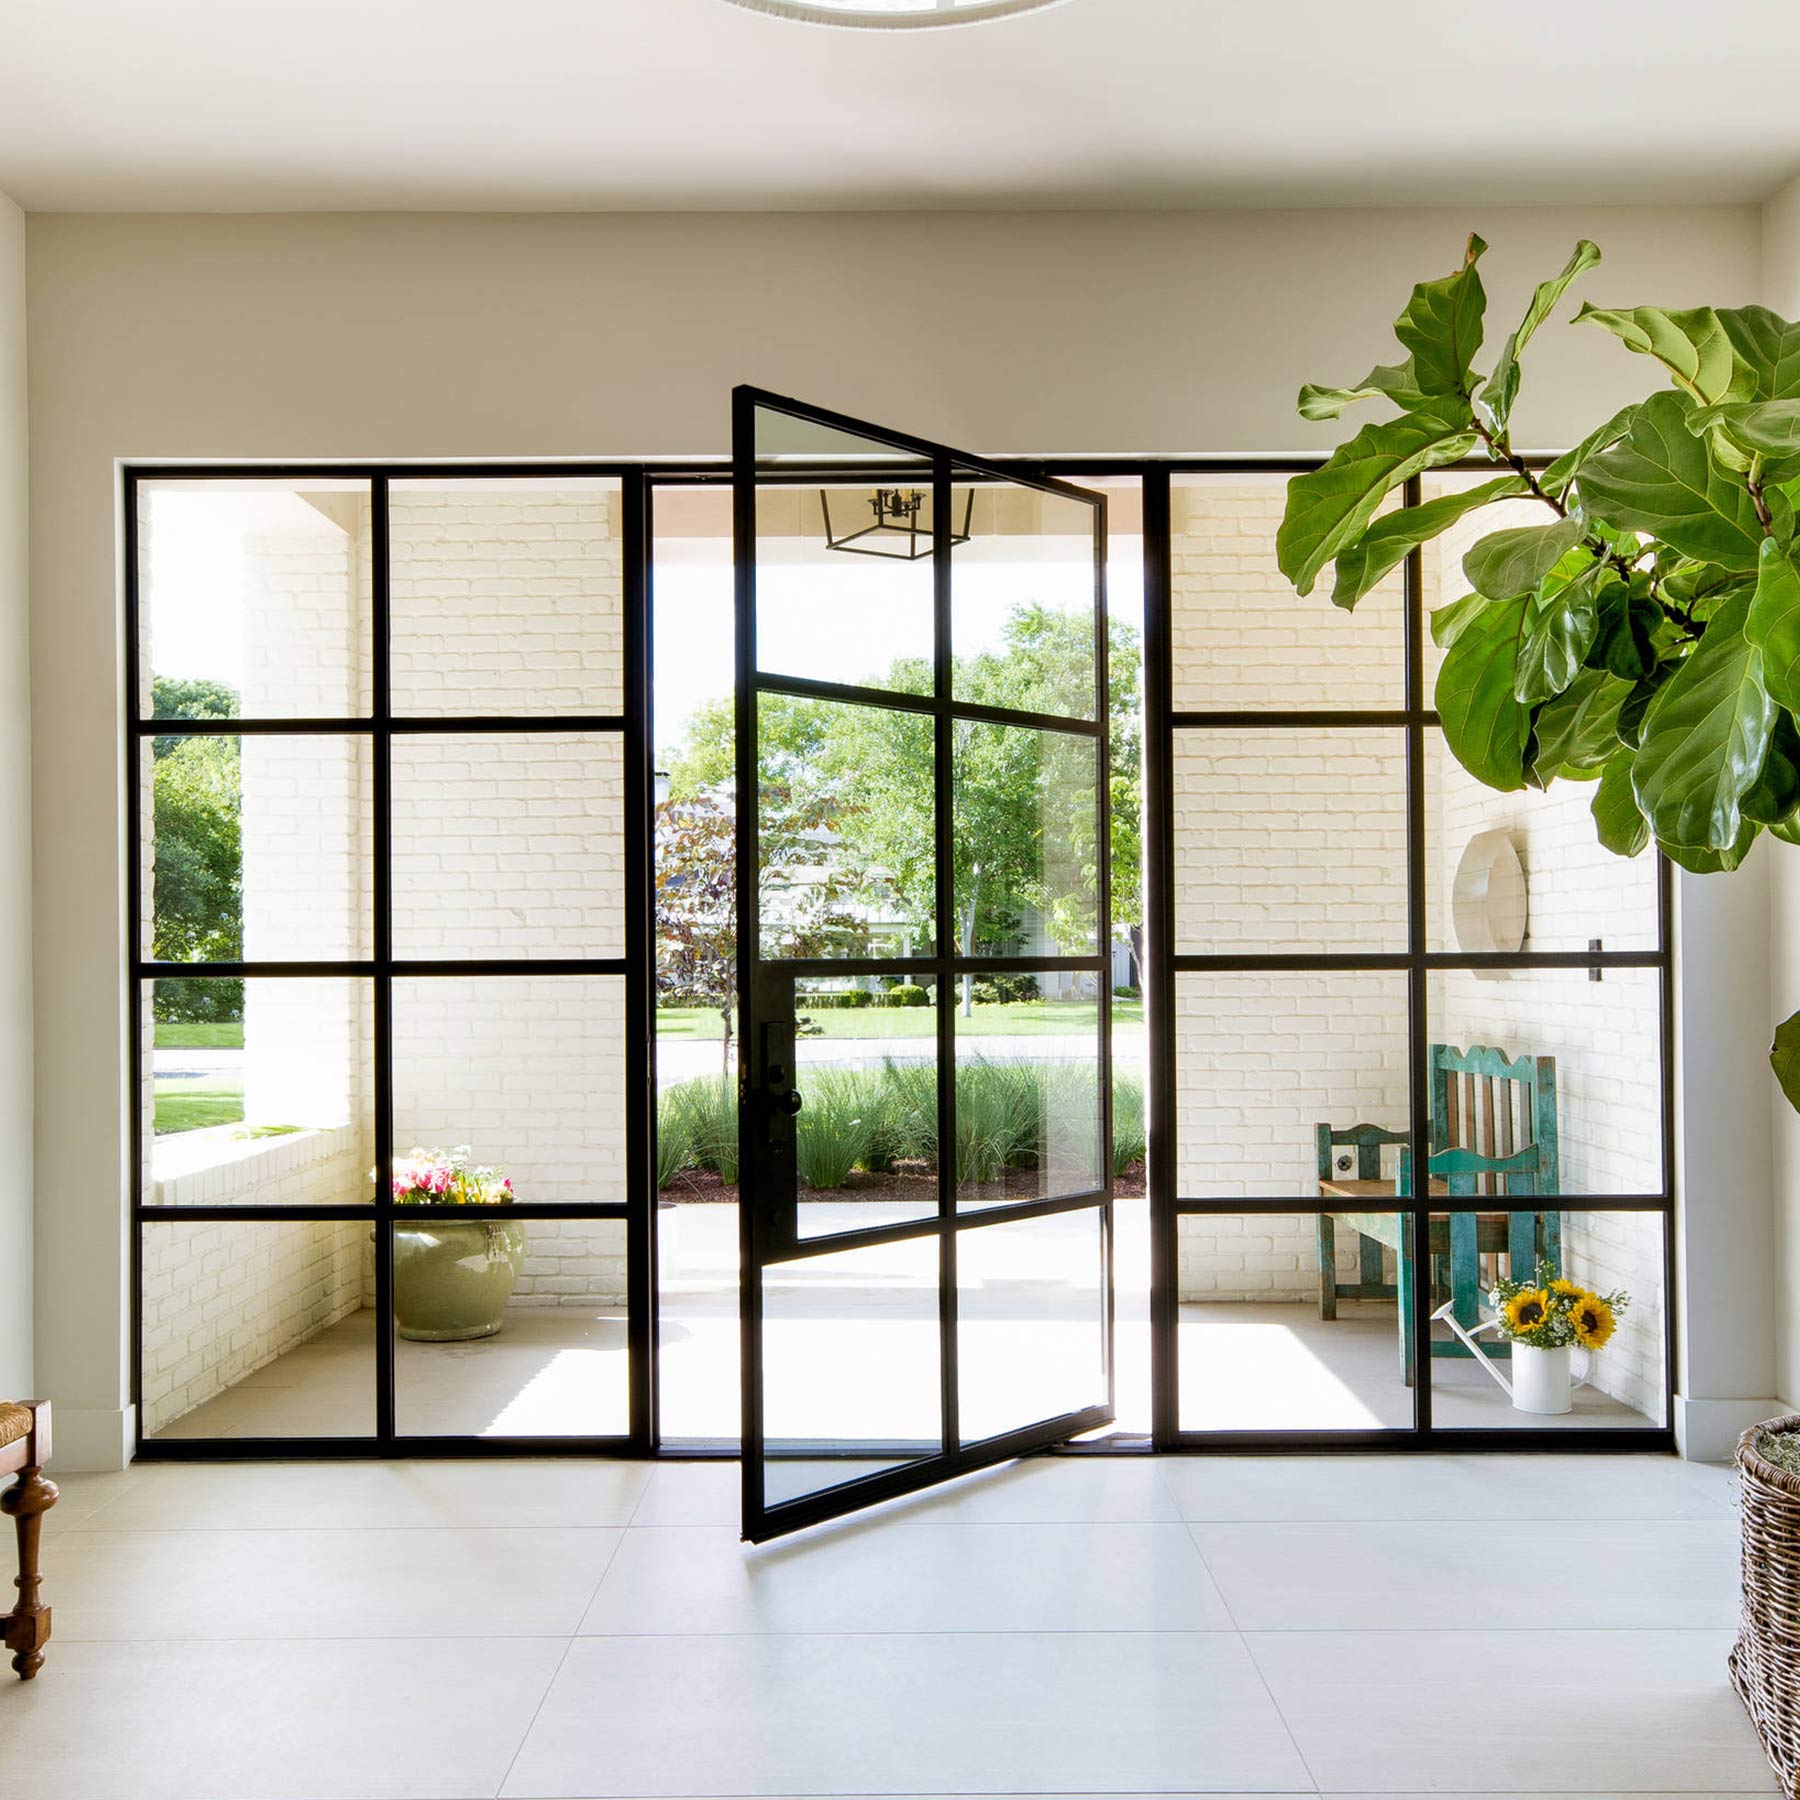 glory iron doors elegant pivot door with sidelights and glass grid